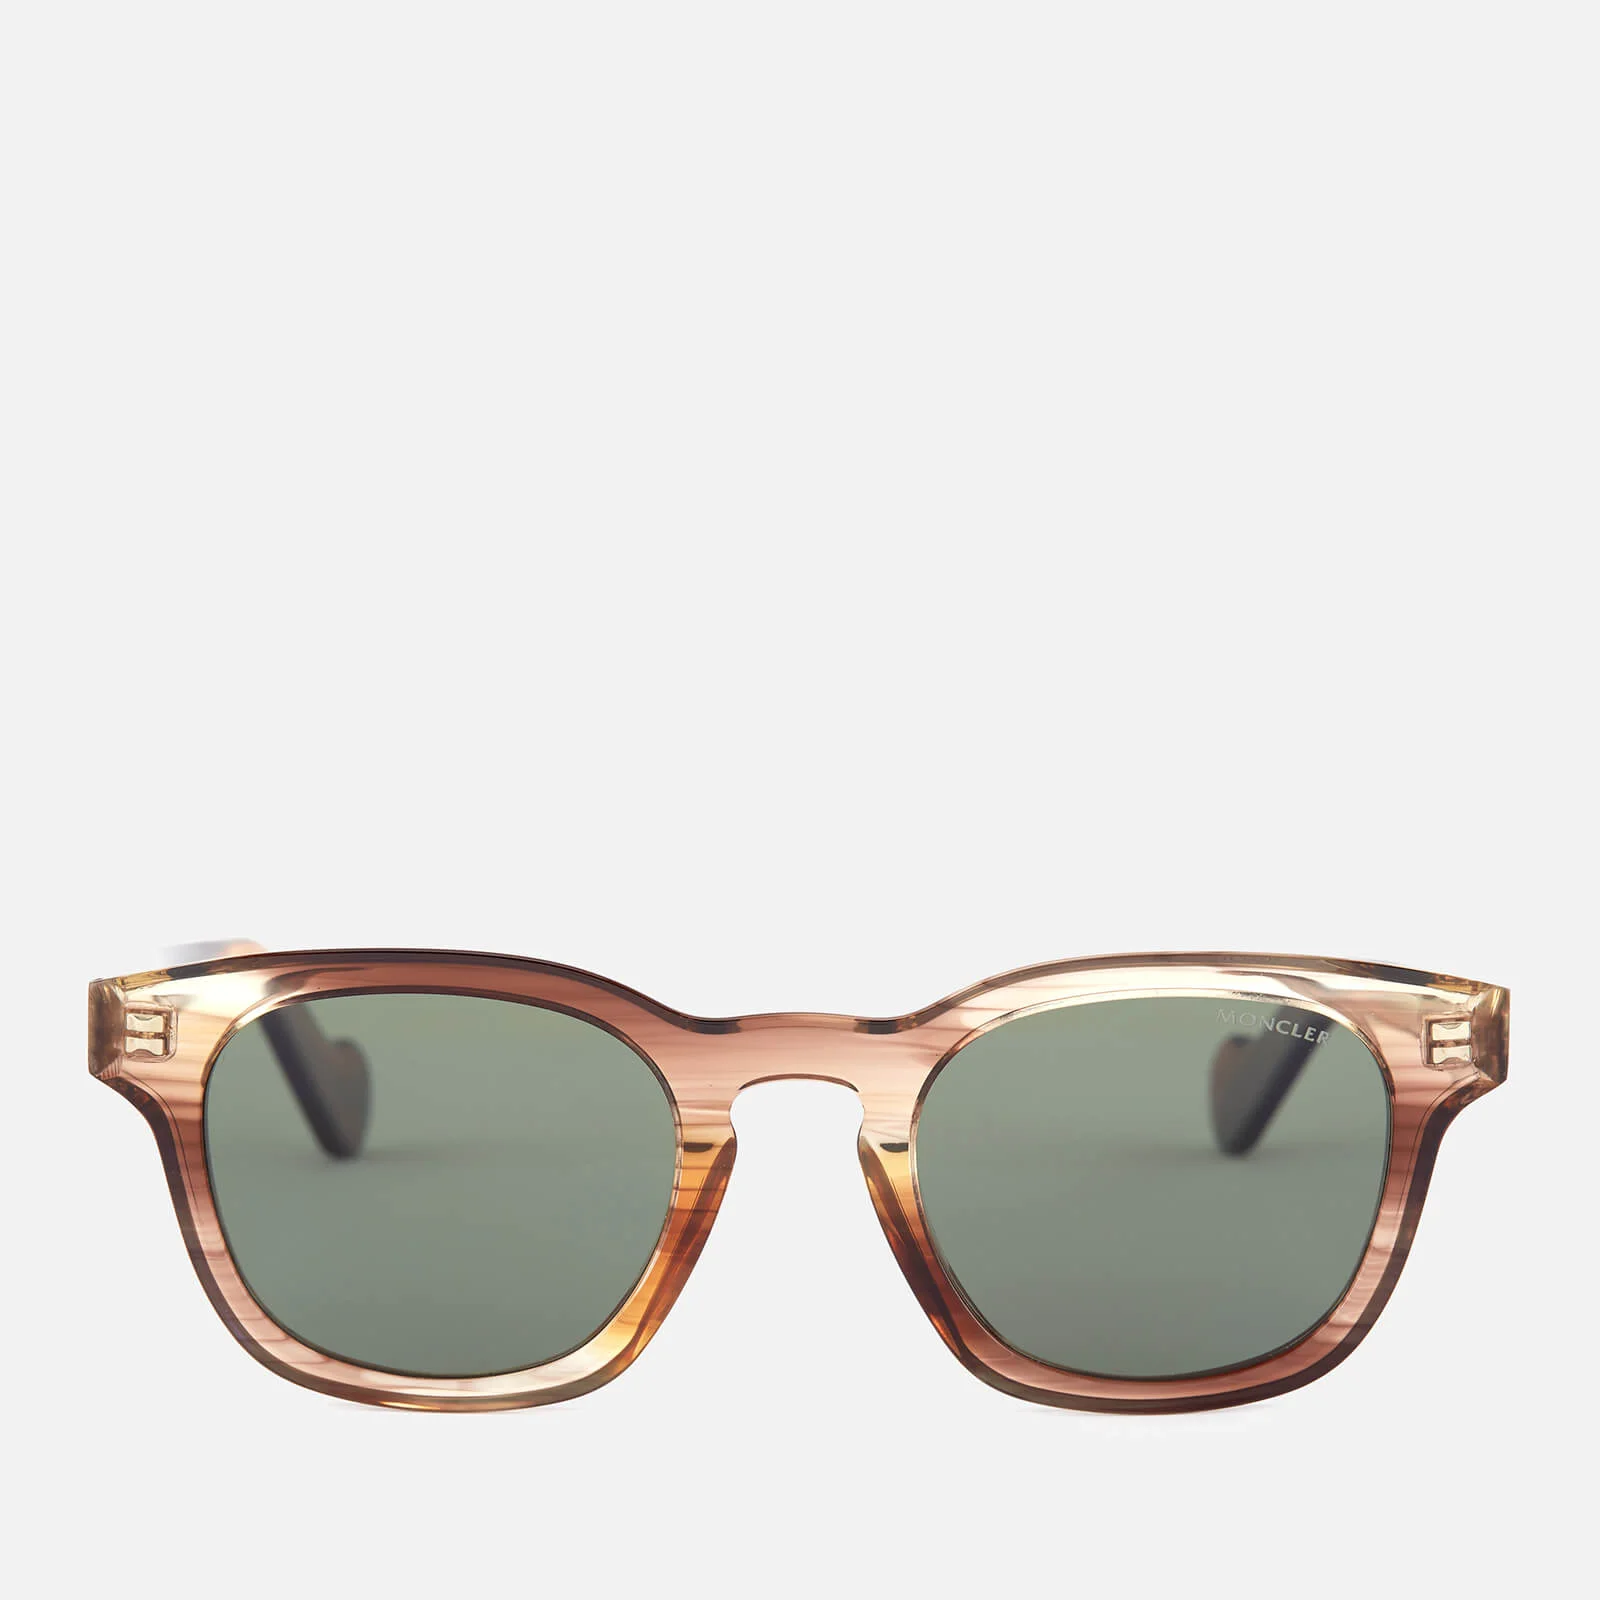 Moncler Men's Wayfarer Sunglasses - Light Brown/Other/Green Polarized Image 1